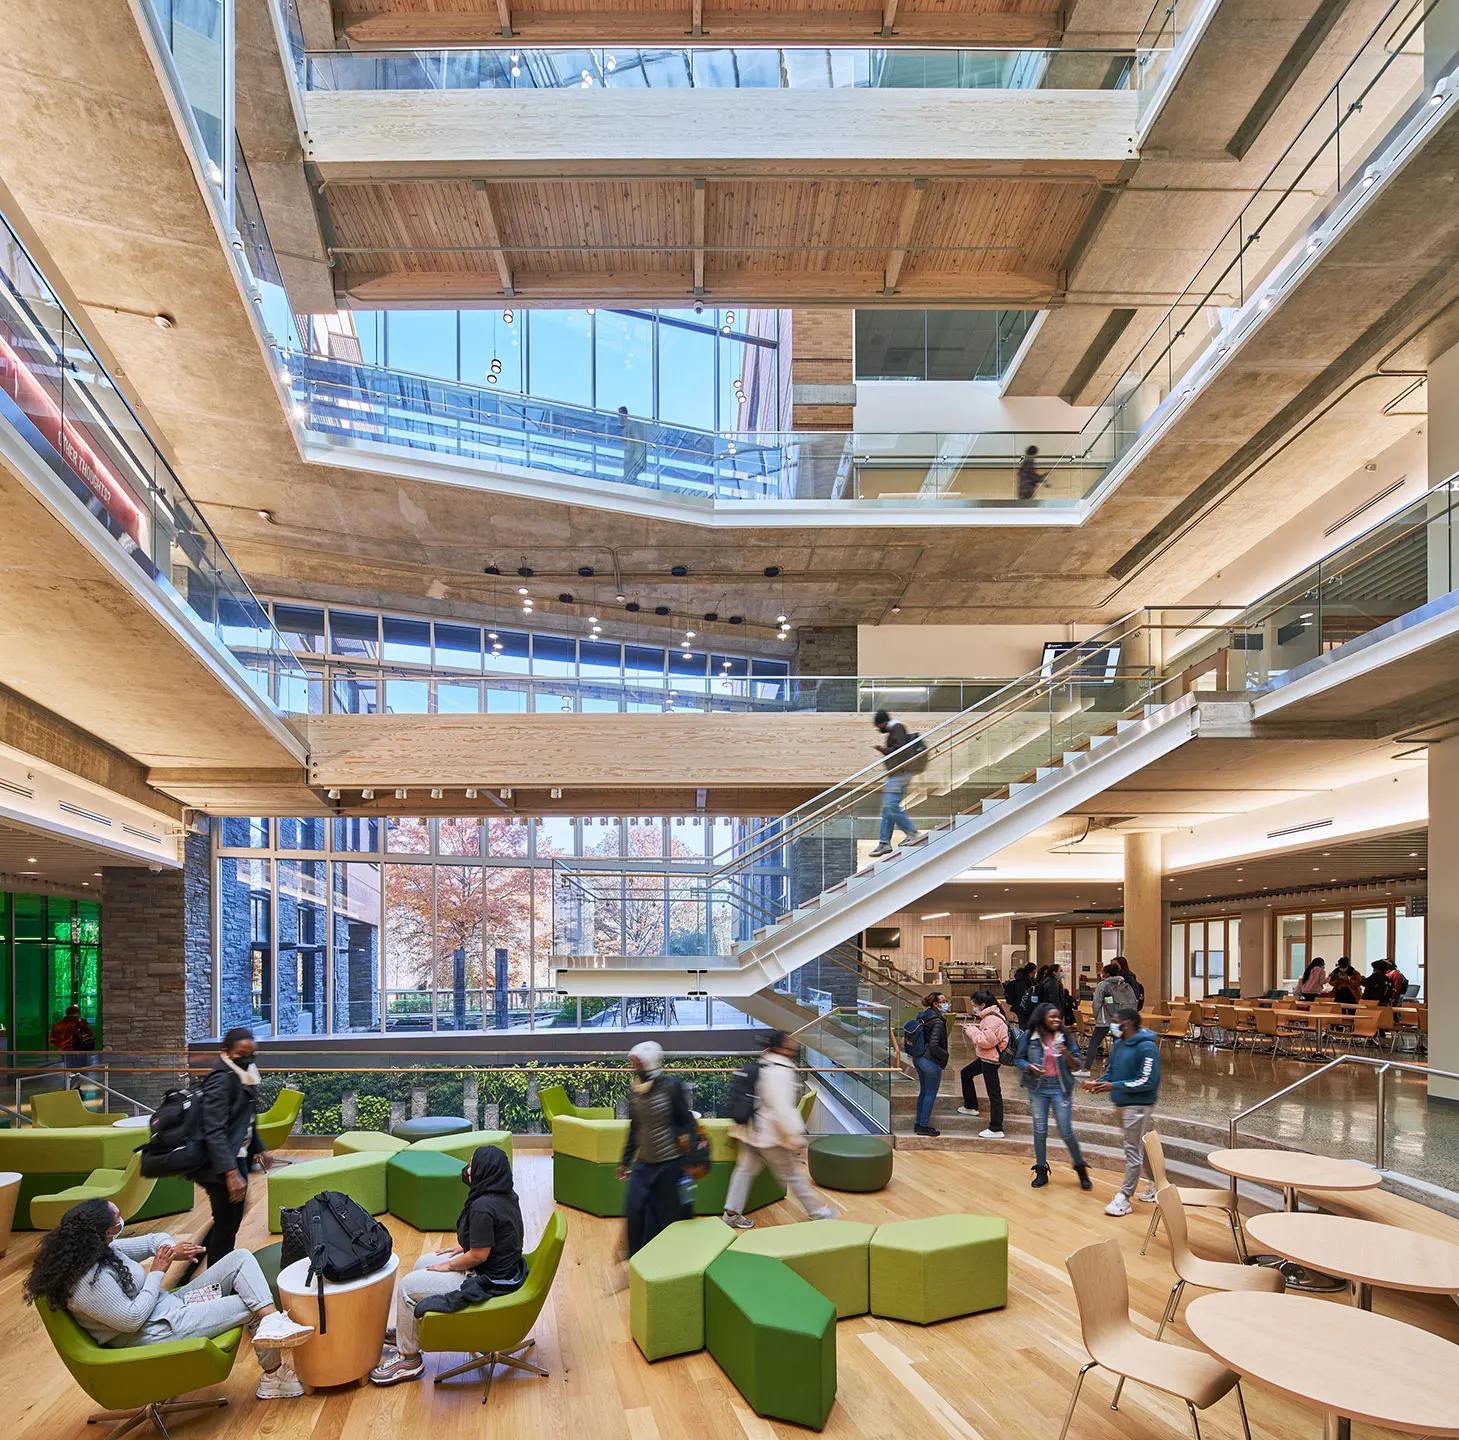 Universities at Shady Grove, Biomedical Sciences and Engineering Education Facility, Interior Atrium